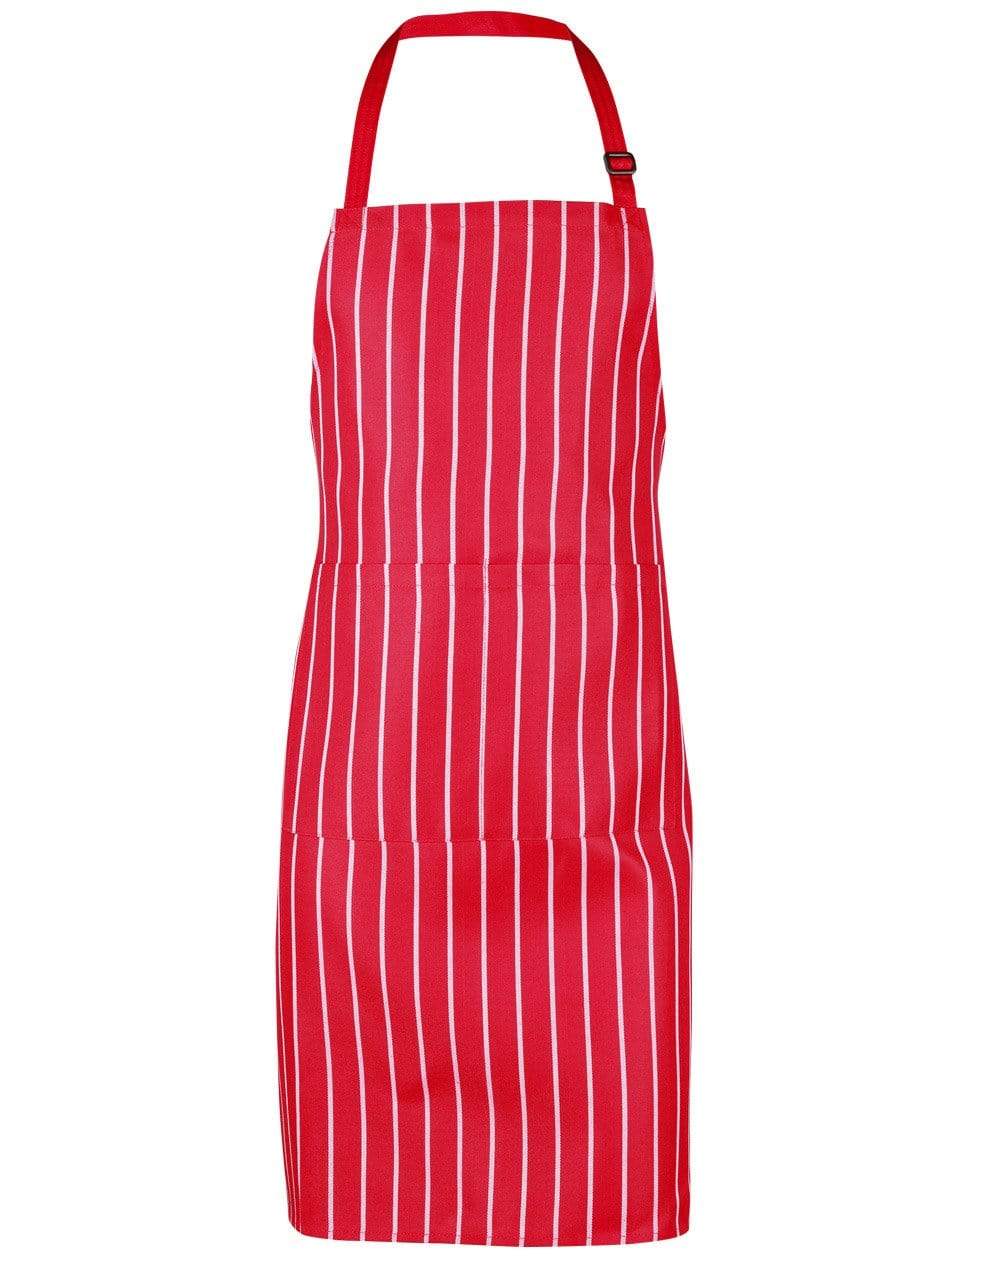 Long Waist Apron AP04 Hospitality & Chefwear Australian Industrial Wear W 70cm x H 85cm Red/White 